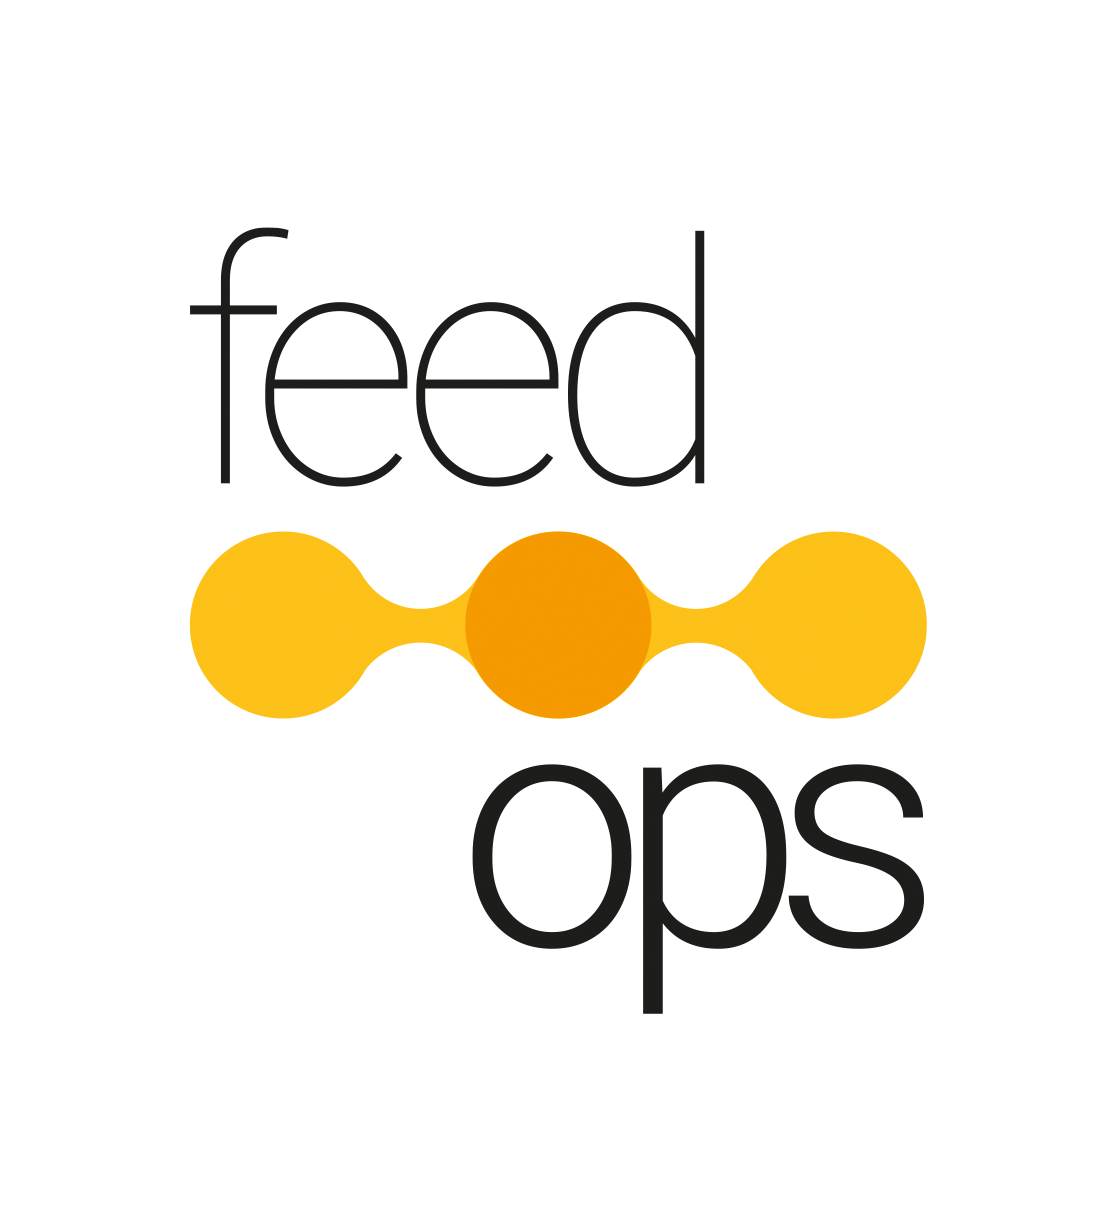 Feedops logo